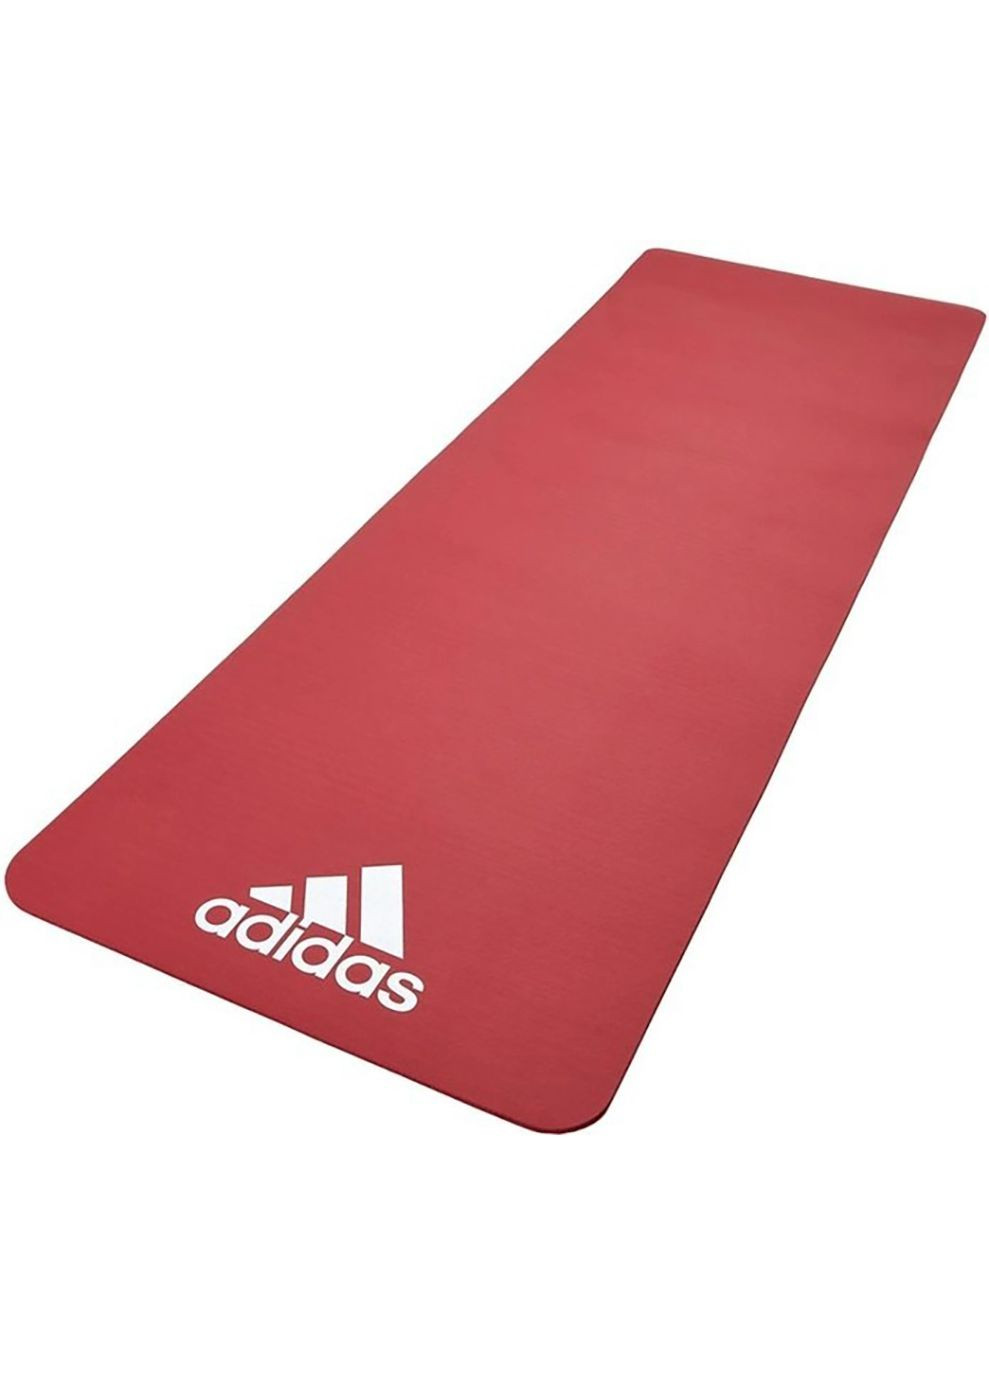 Килимок для йоги Fitness Mat червоний adidas (268743544)